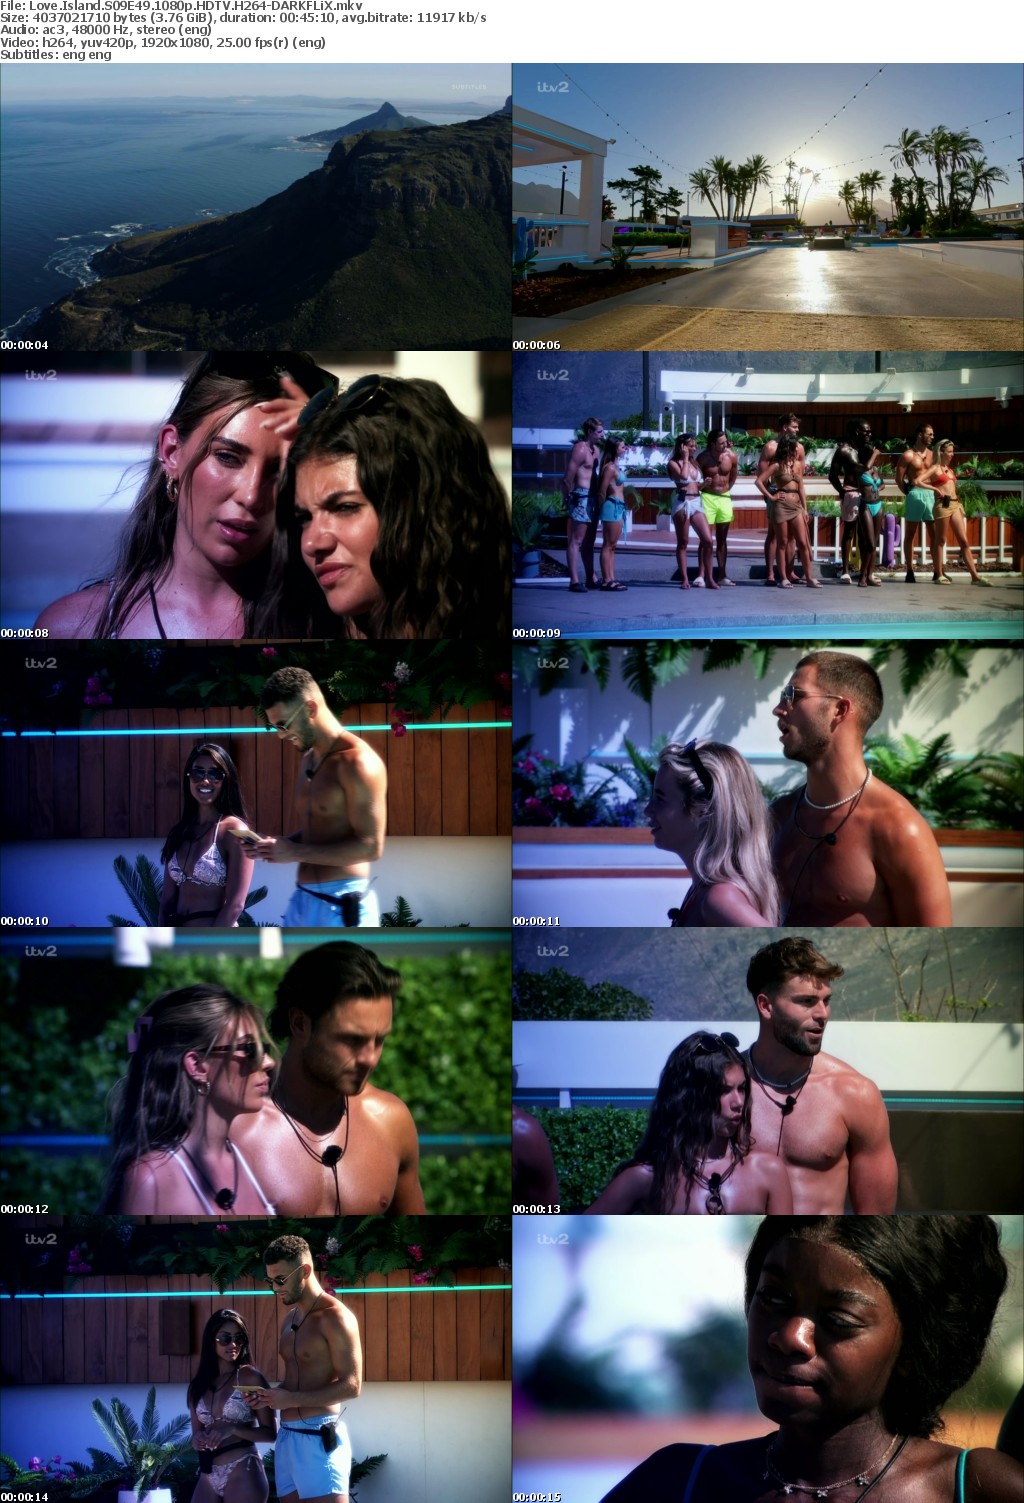 Love Island S09E49 1080p HDTV H264-DARKFLiX